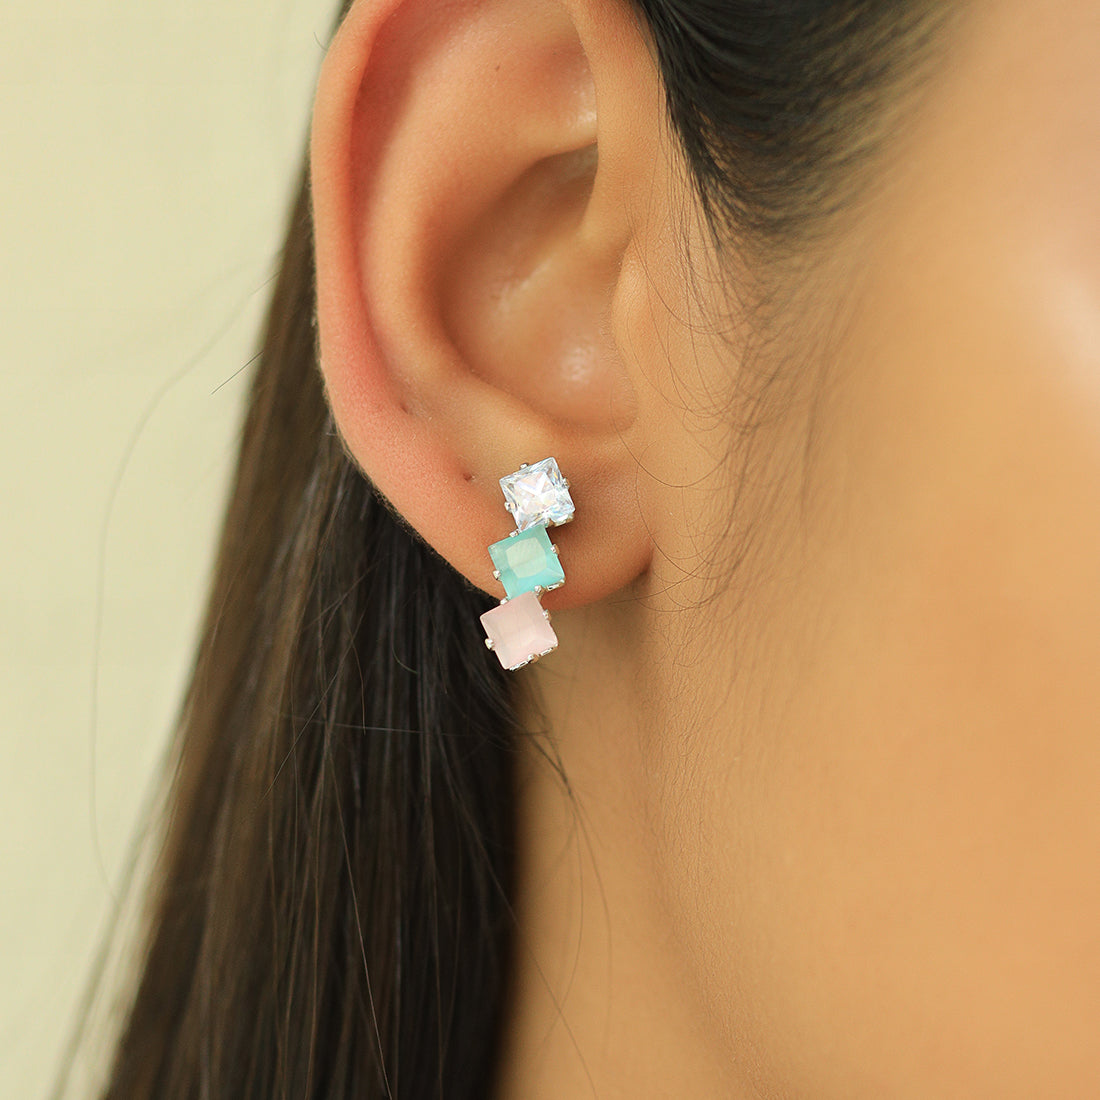 Triple Stone Stud Earring - Pink, Blue, Diamond